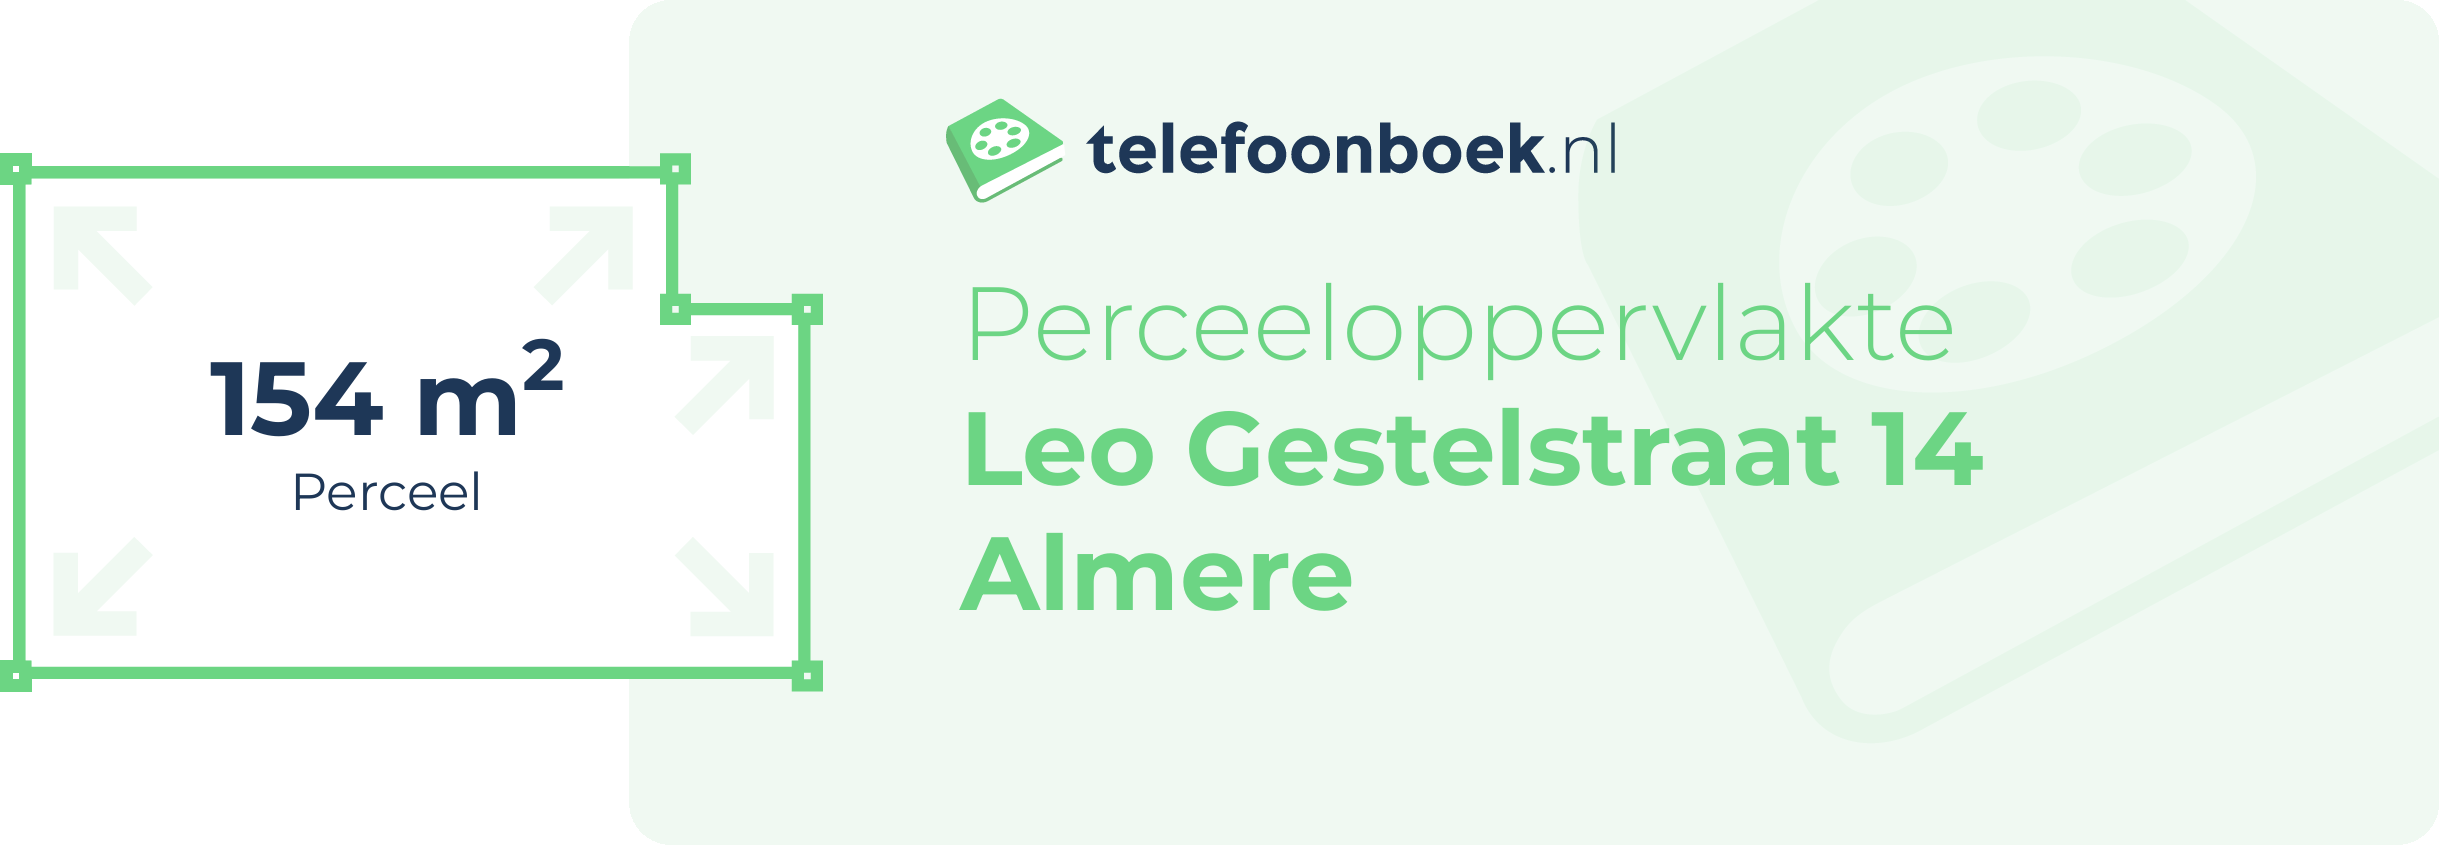 Perceeloppervlakte Leo Gestelstraat 14 Almere